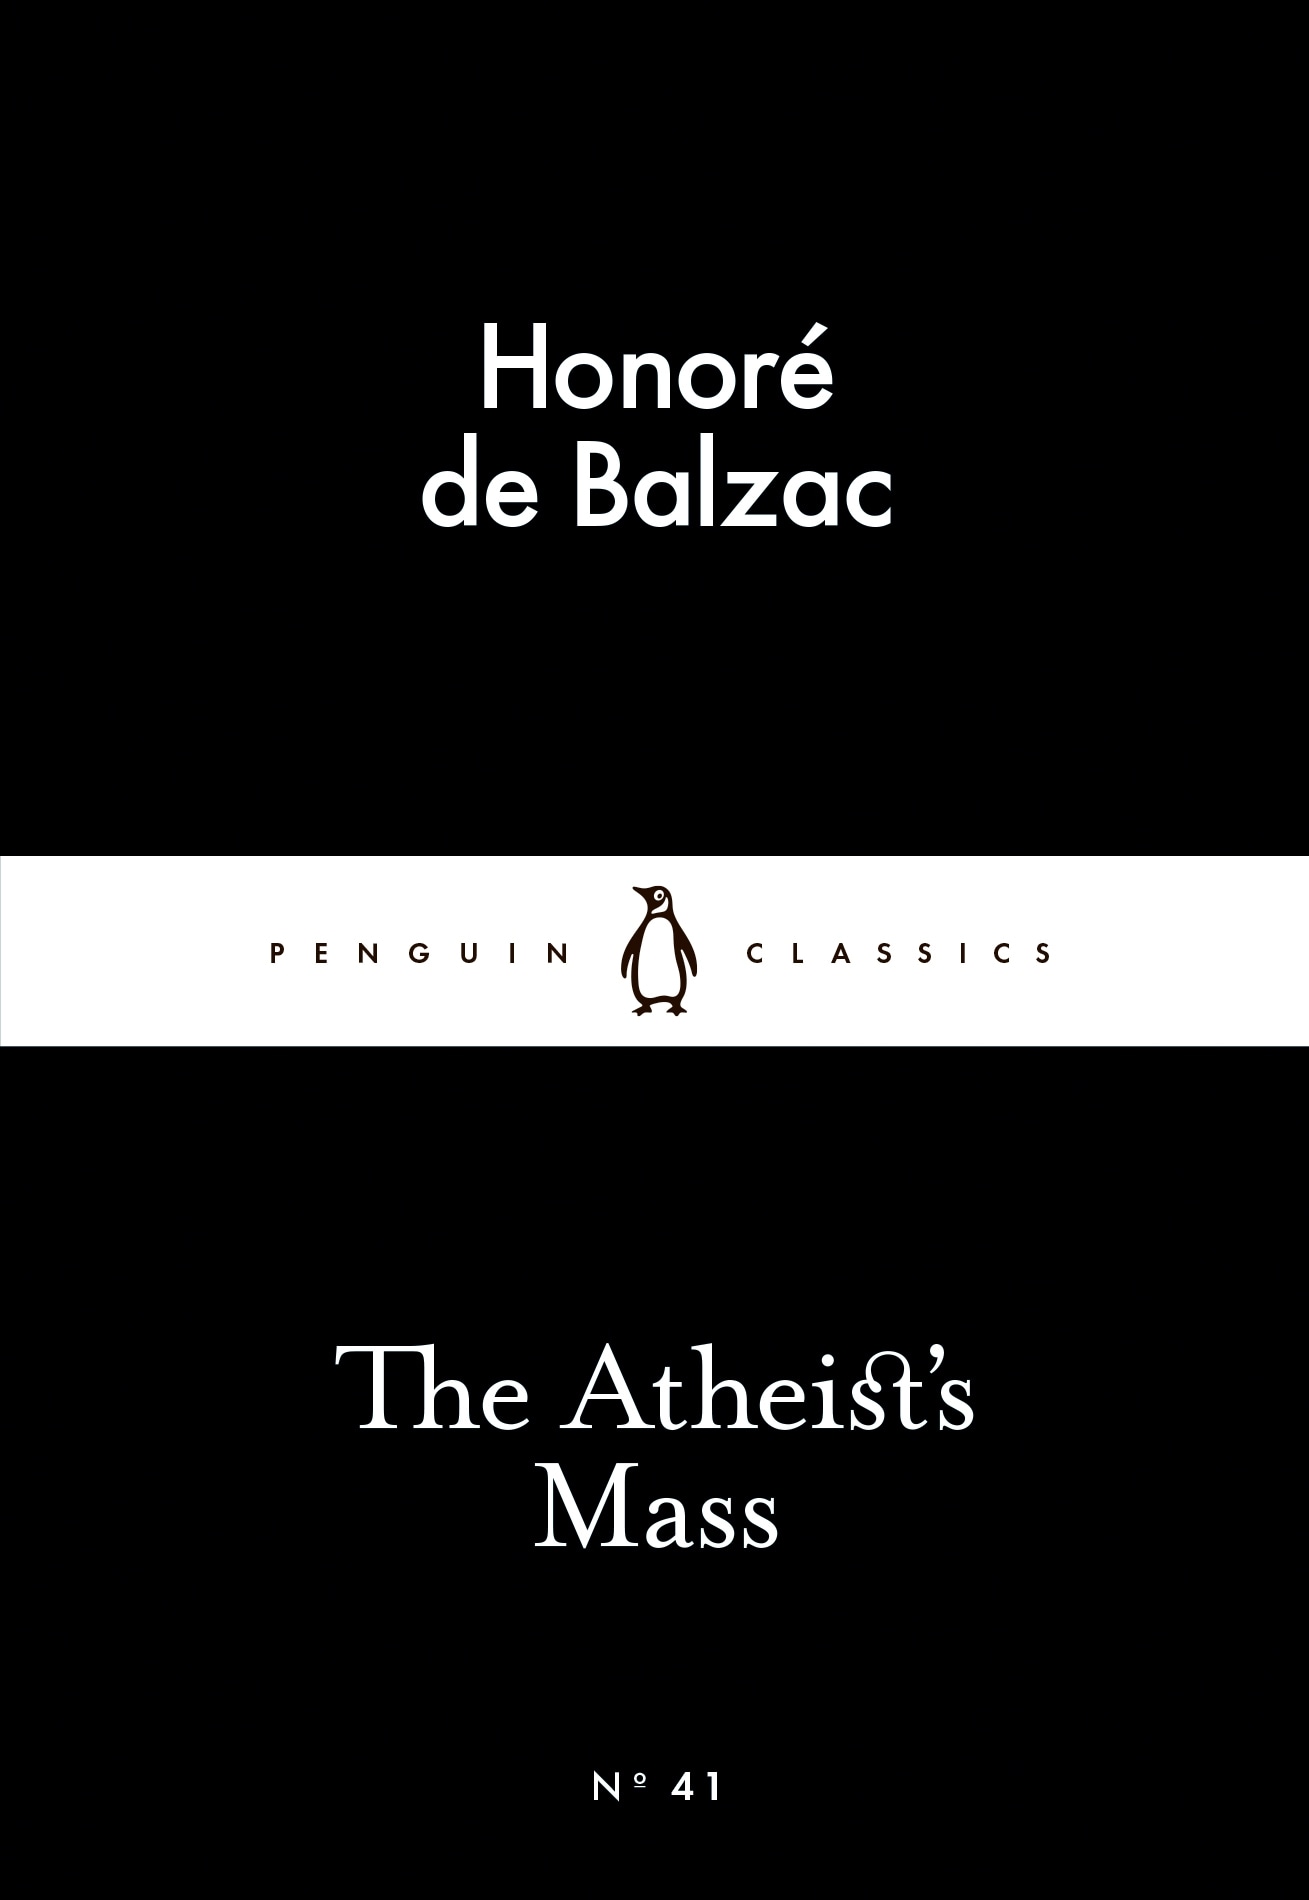 Book “The Atheist's Mass” by Honore de Balzac — February 26, 2015